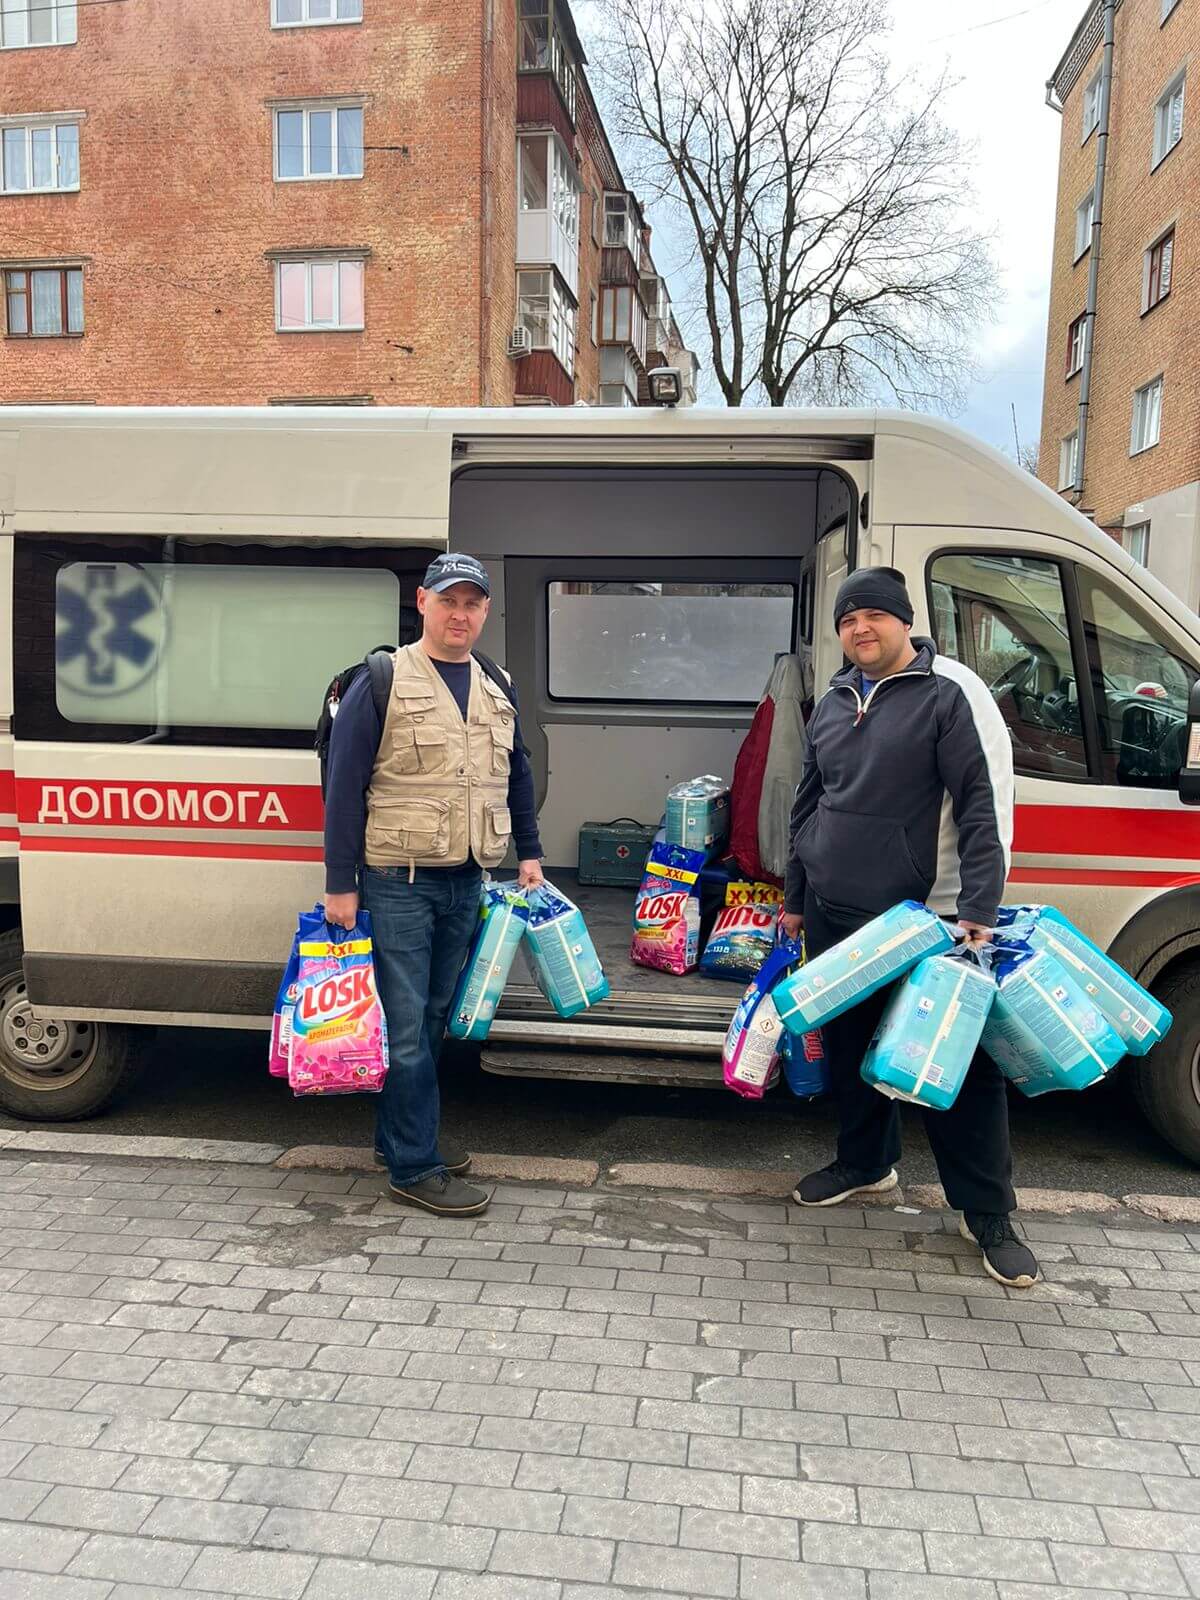 Our team delivering supplies in Ukraine.